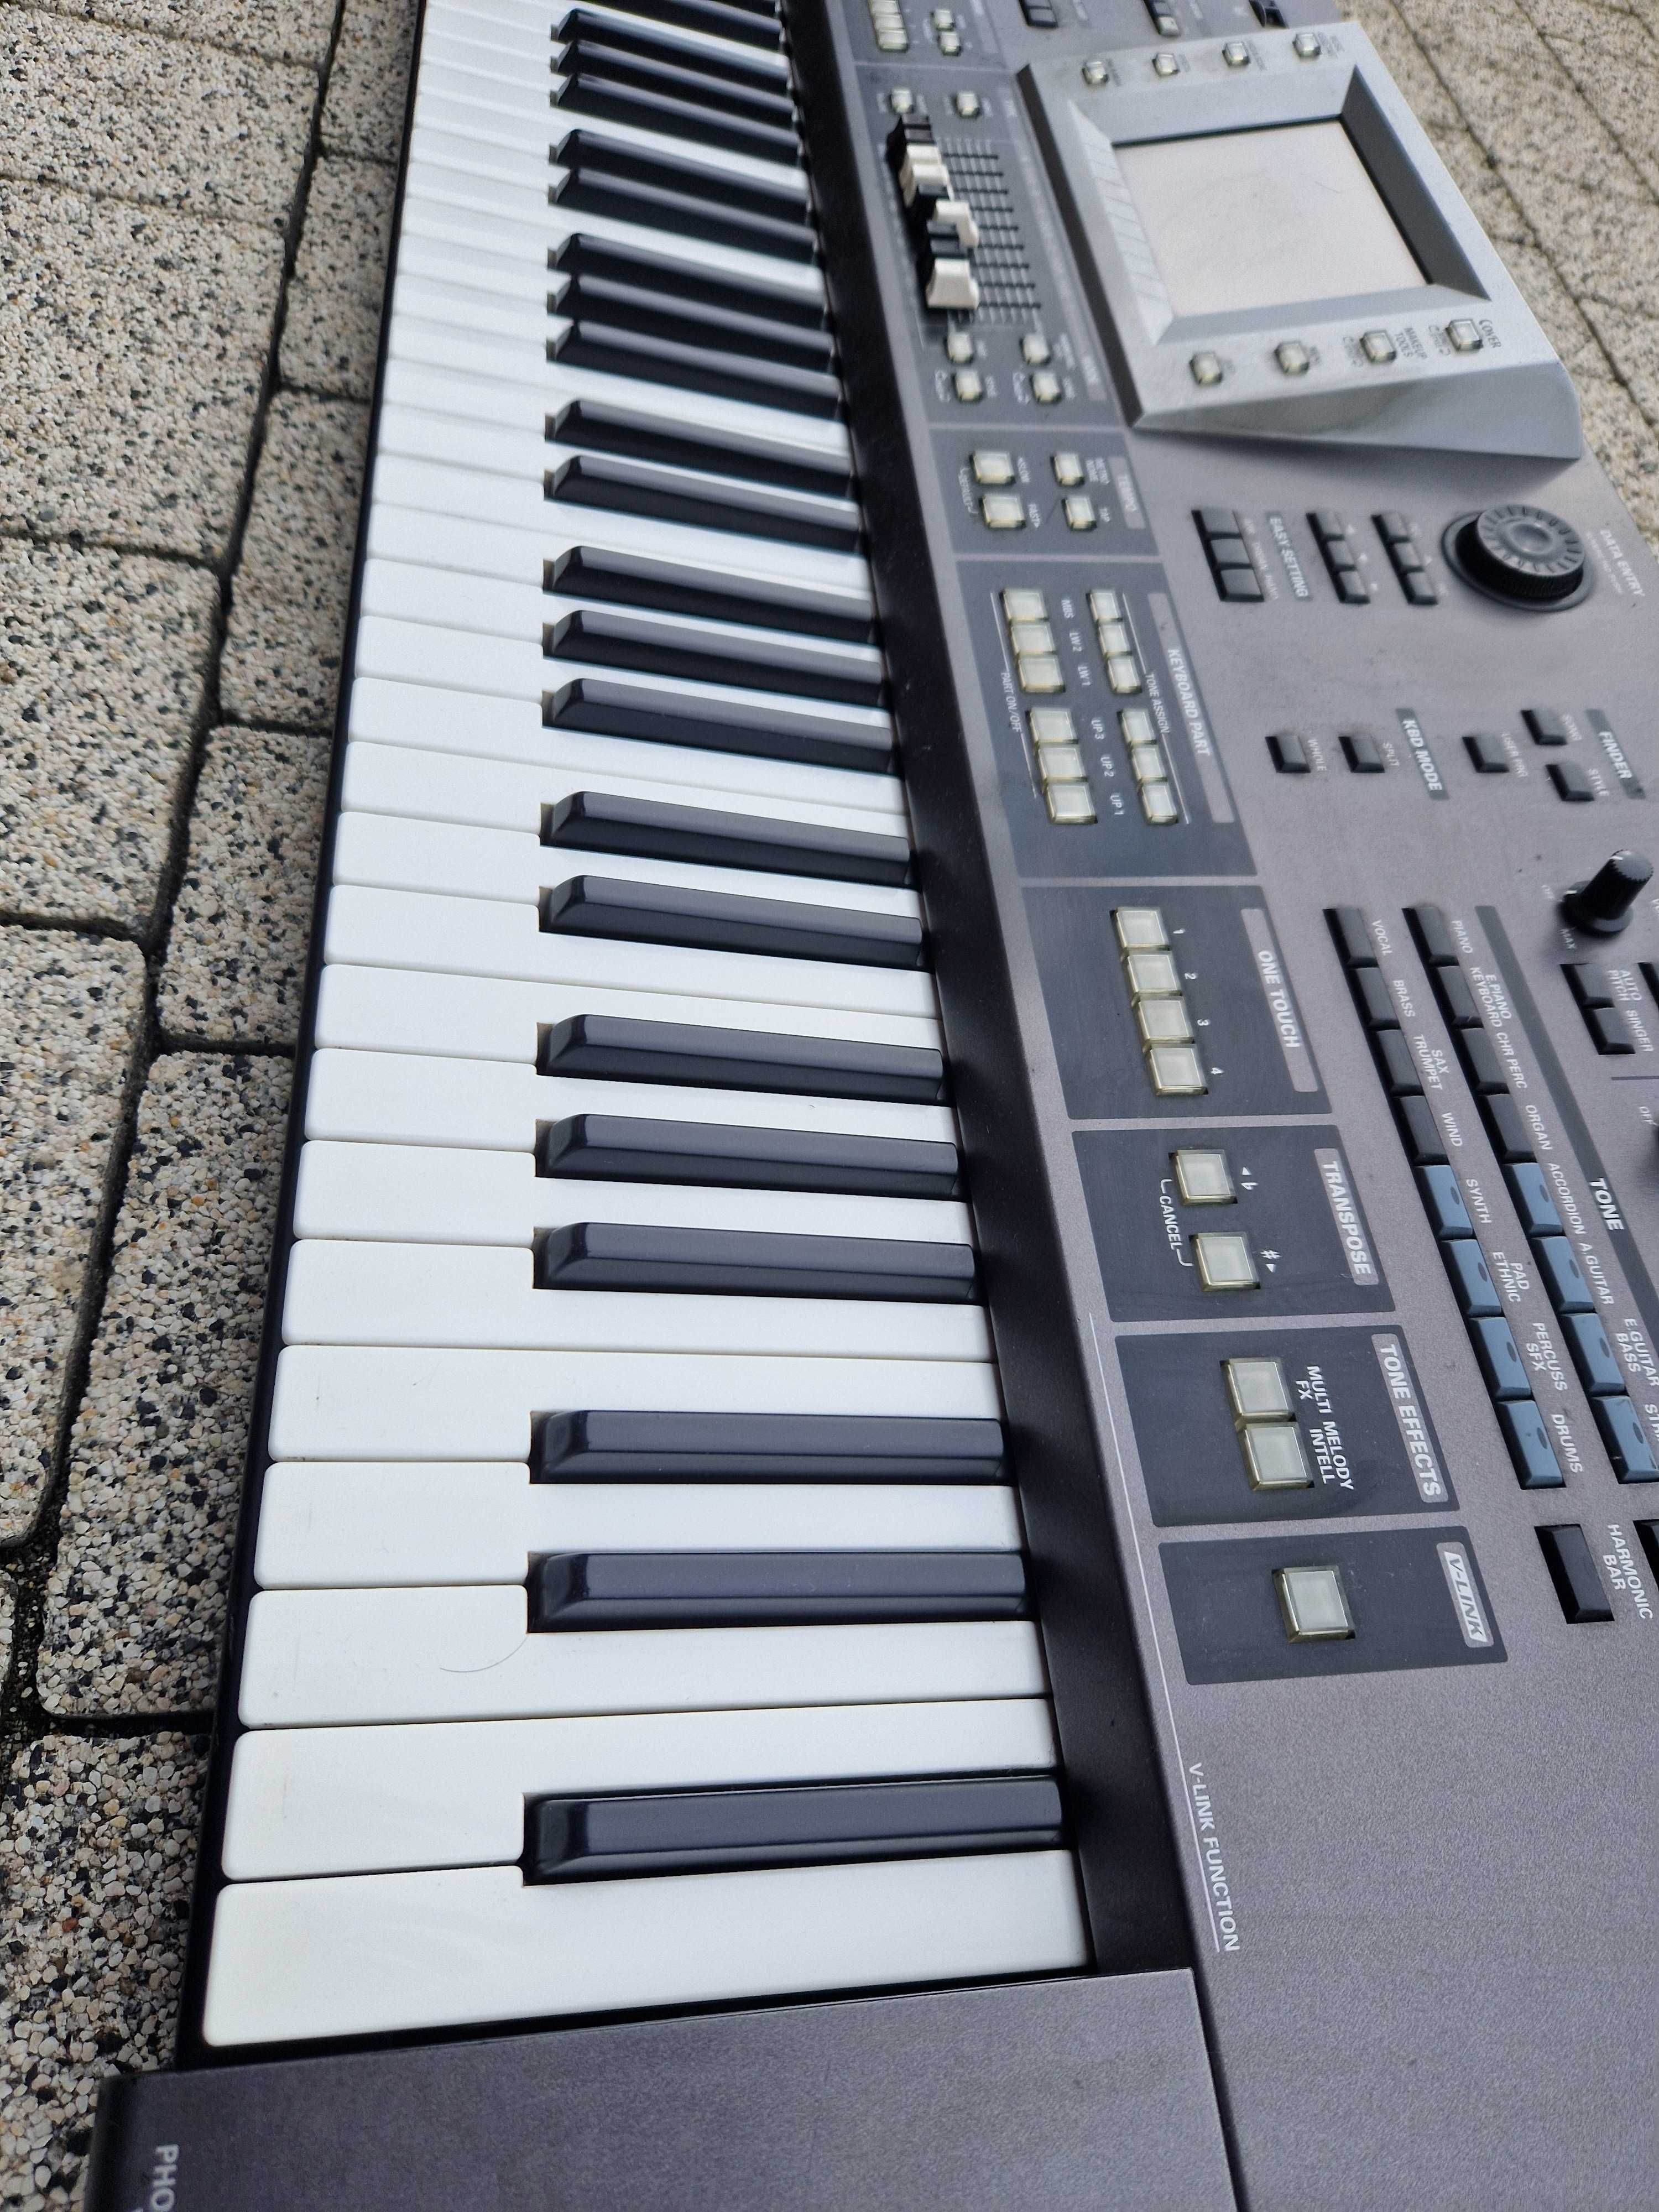 Roland G70 Case Gratis Keyboard Aranżer